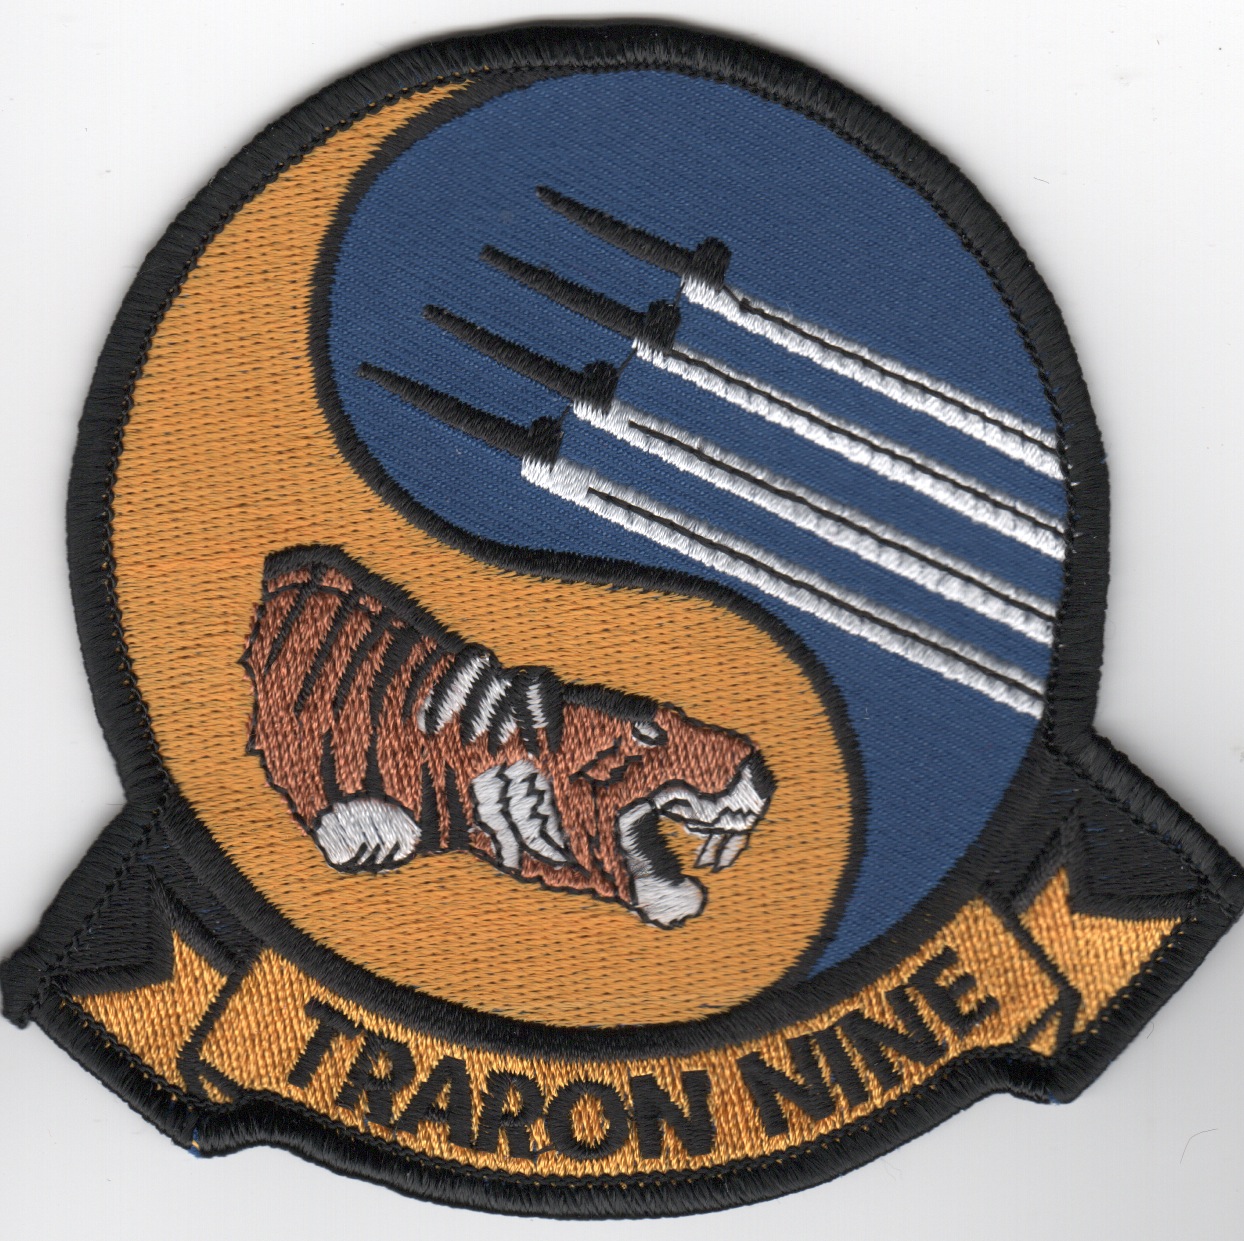 Training Squadron Nine (Tiger-head)